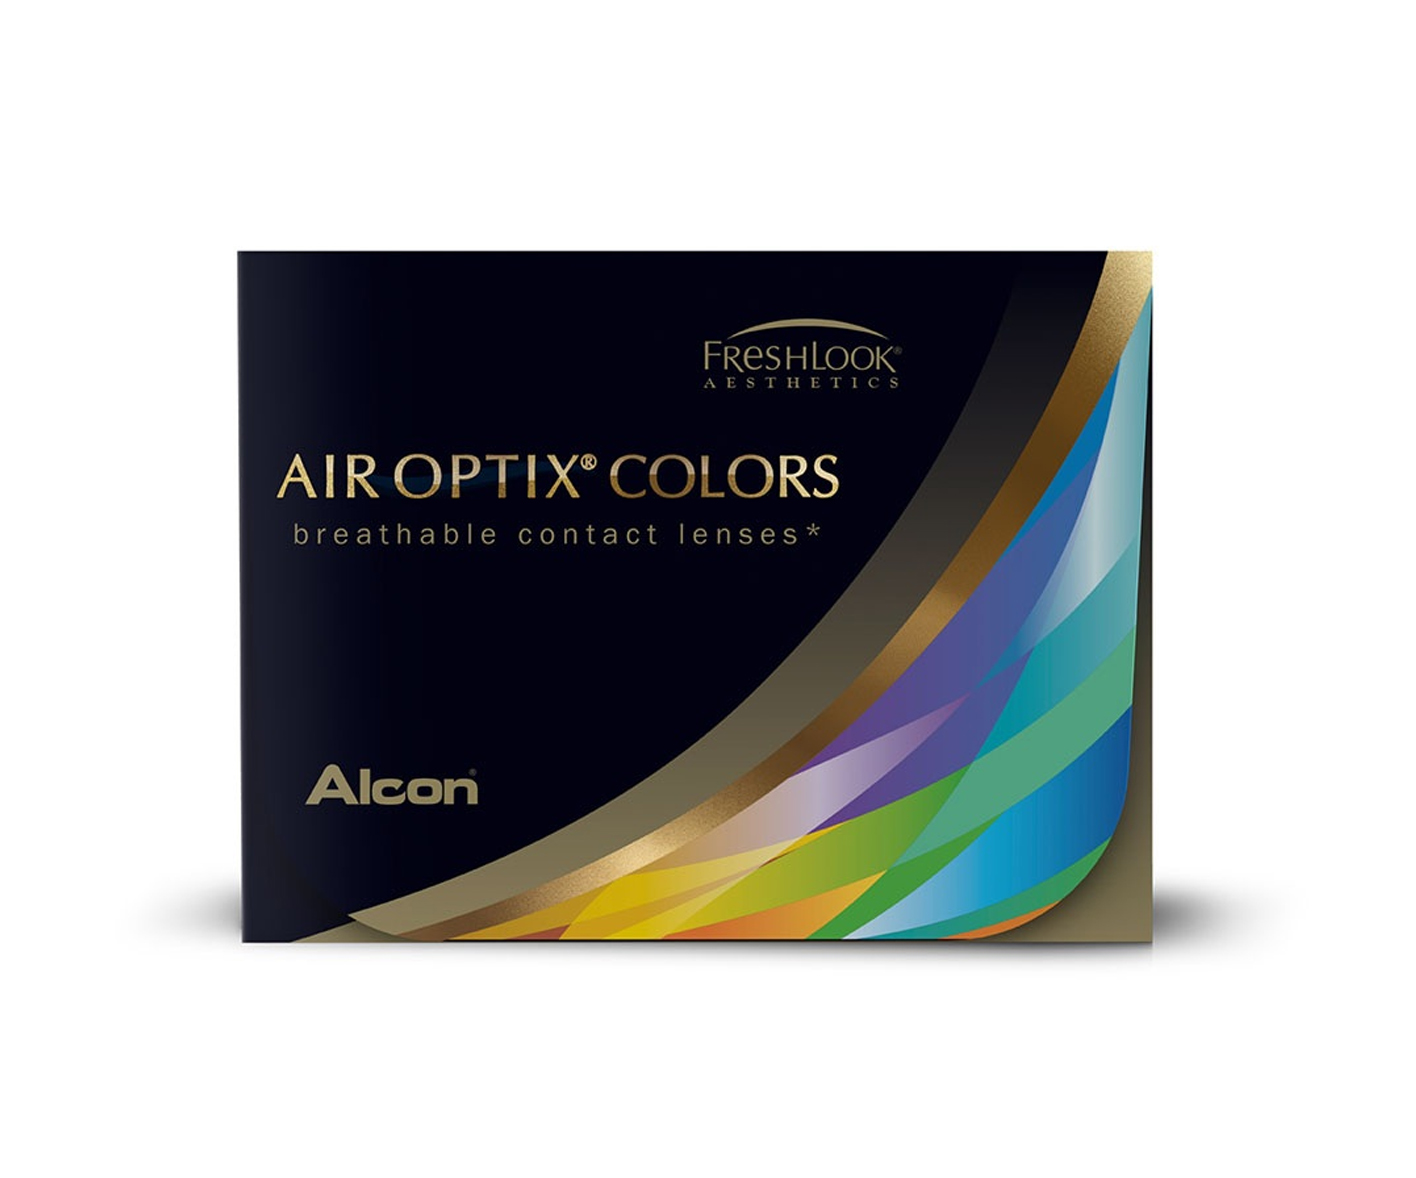 Air Optix Colours, barna, barna lencsék